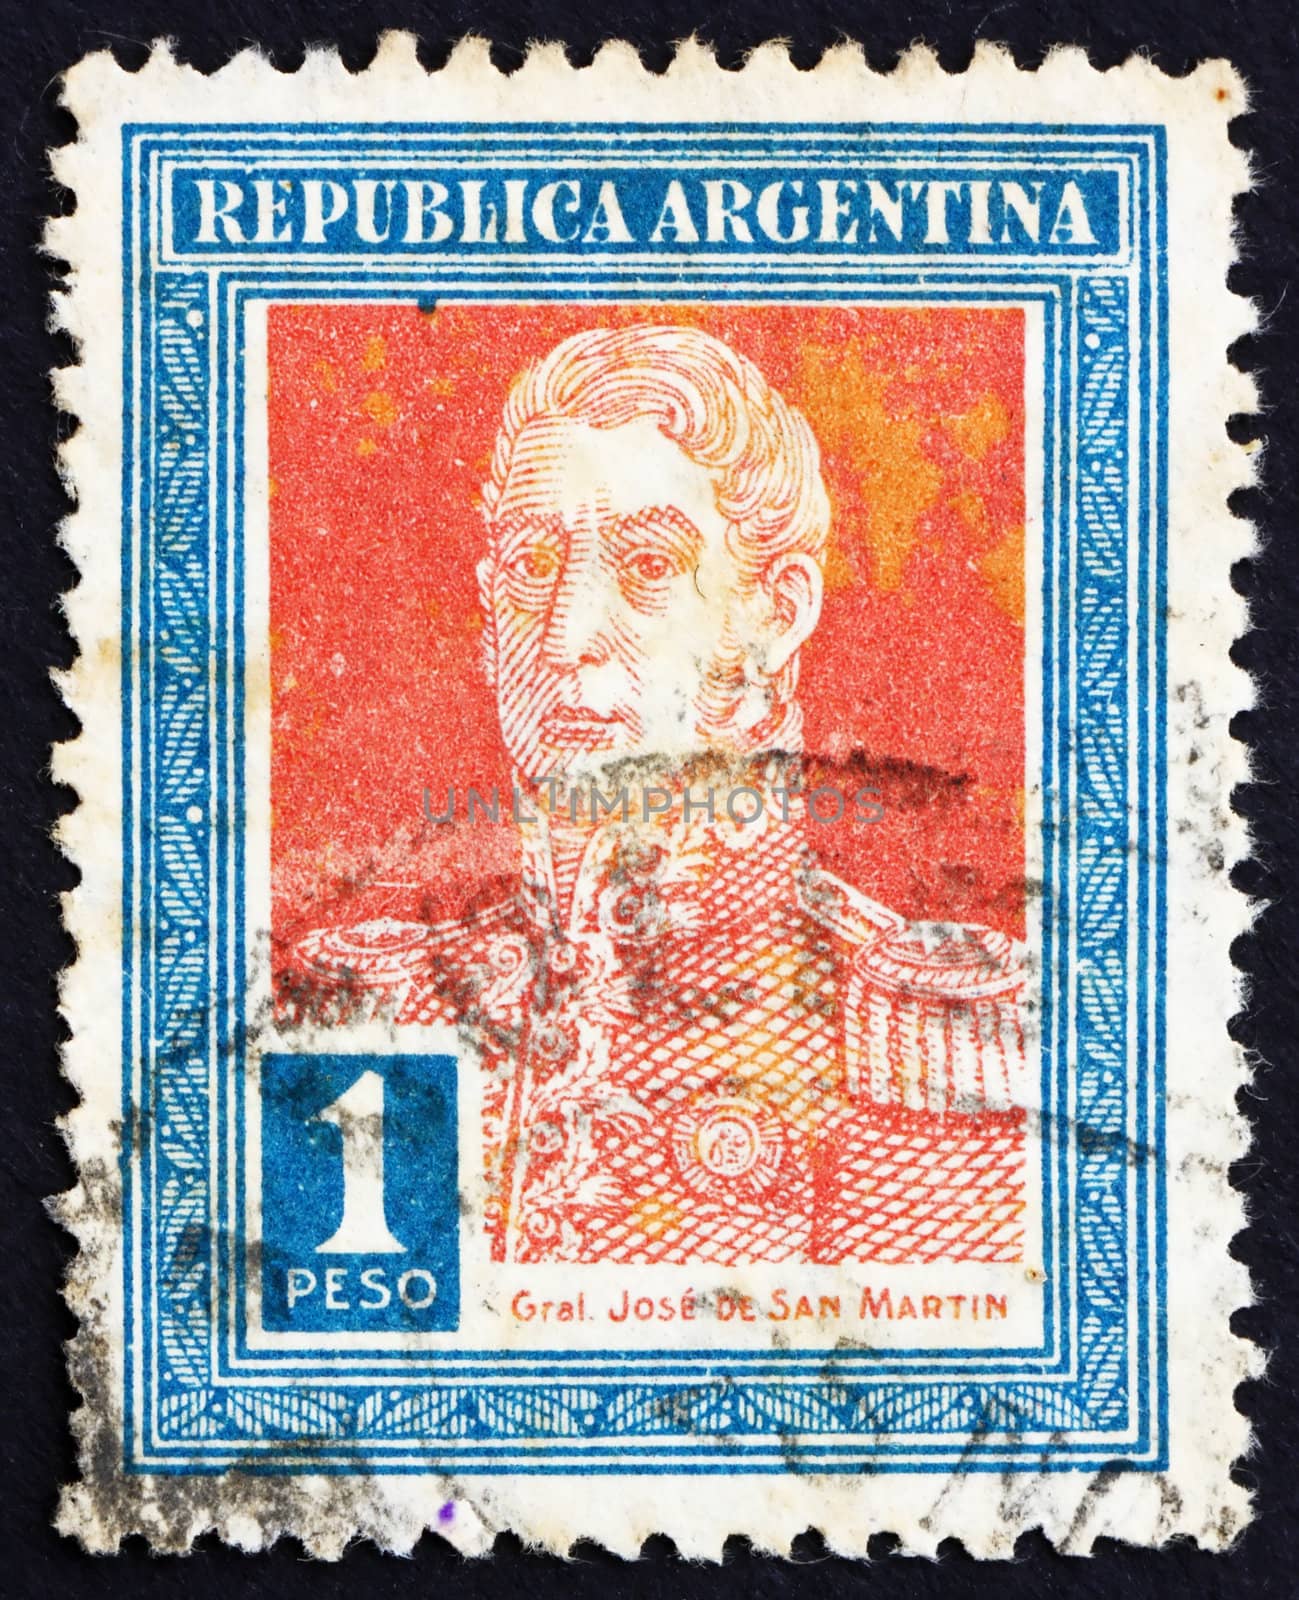 ARGENTINA - CIRCA 1923: a stamp printed in the Argentina shows Jose de San Martin, General, circa 1923